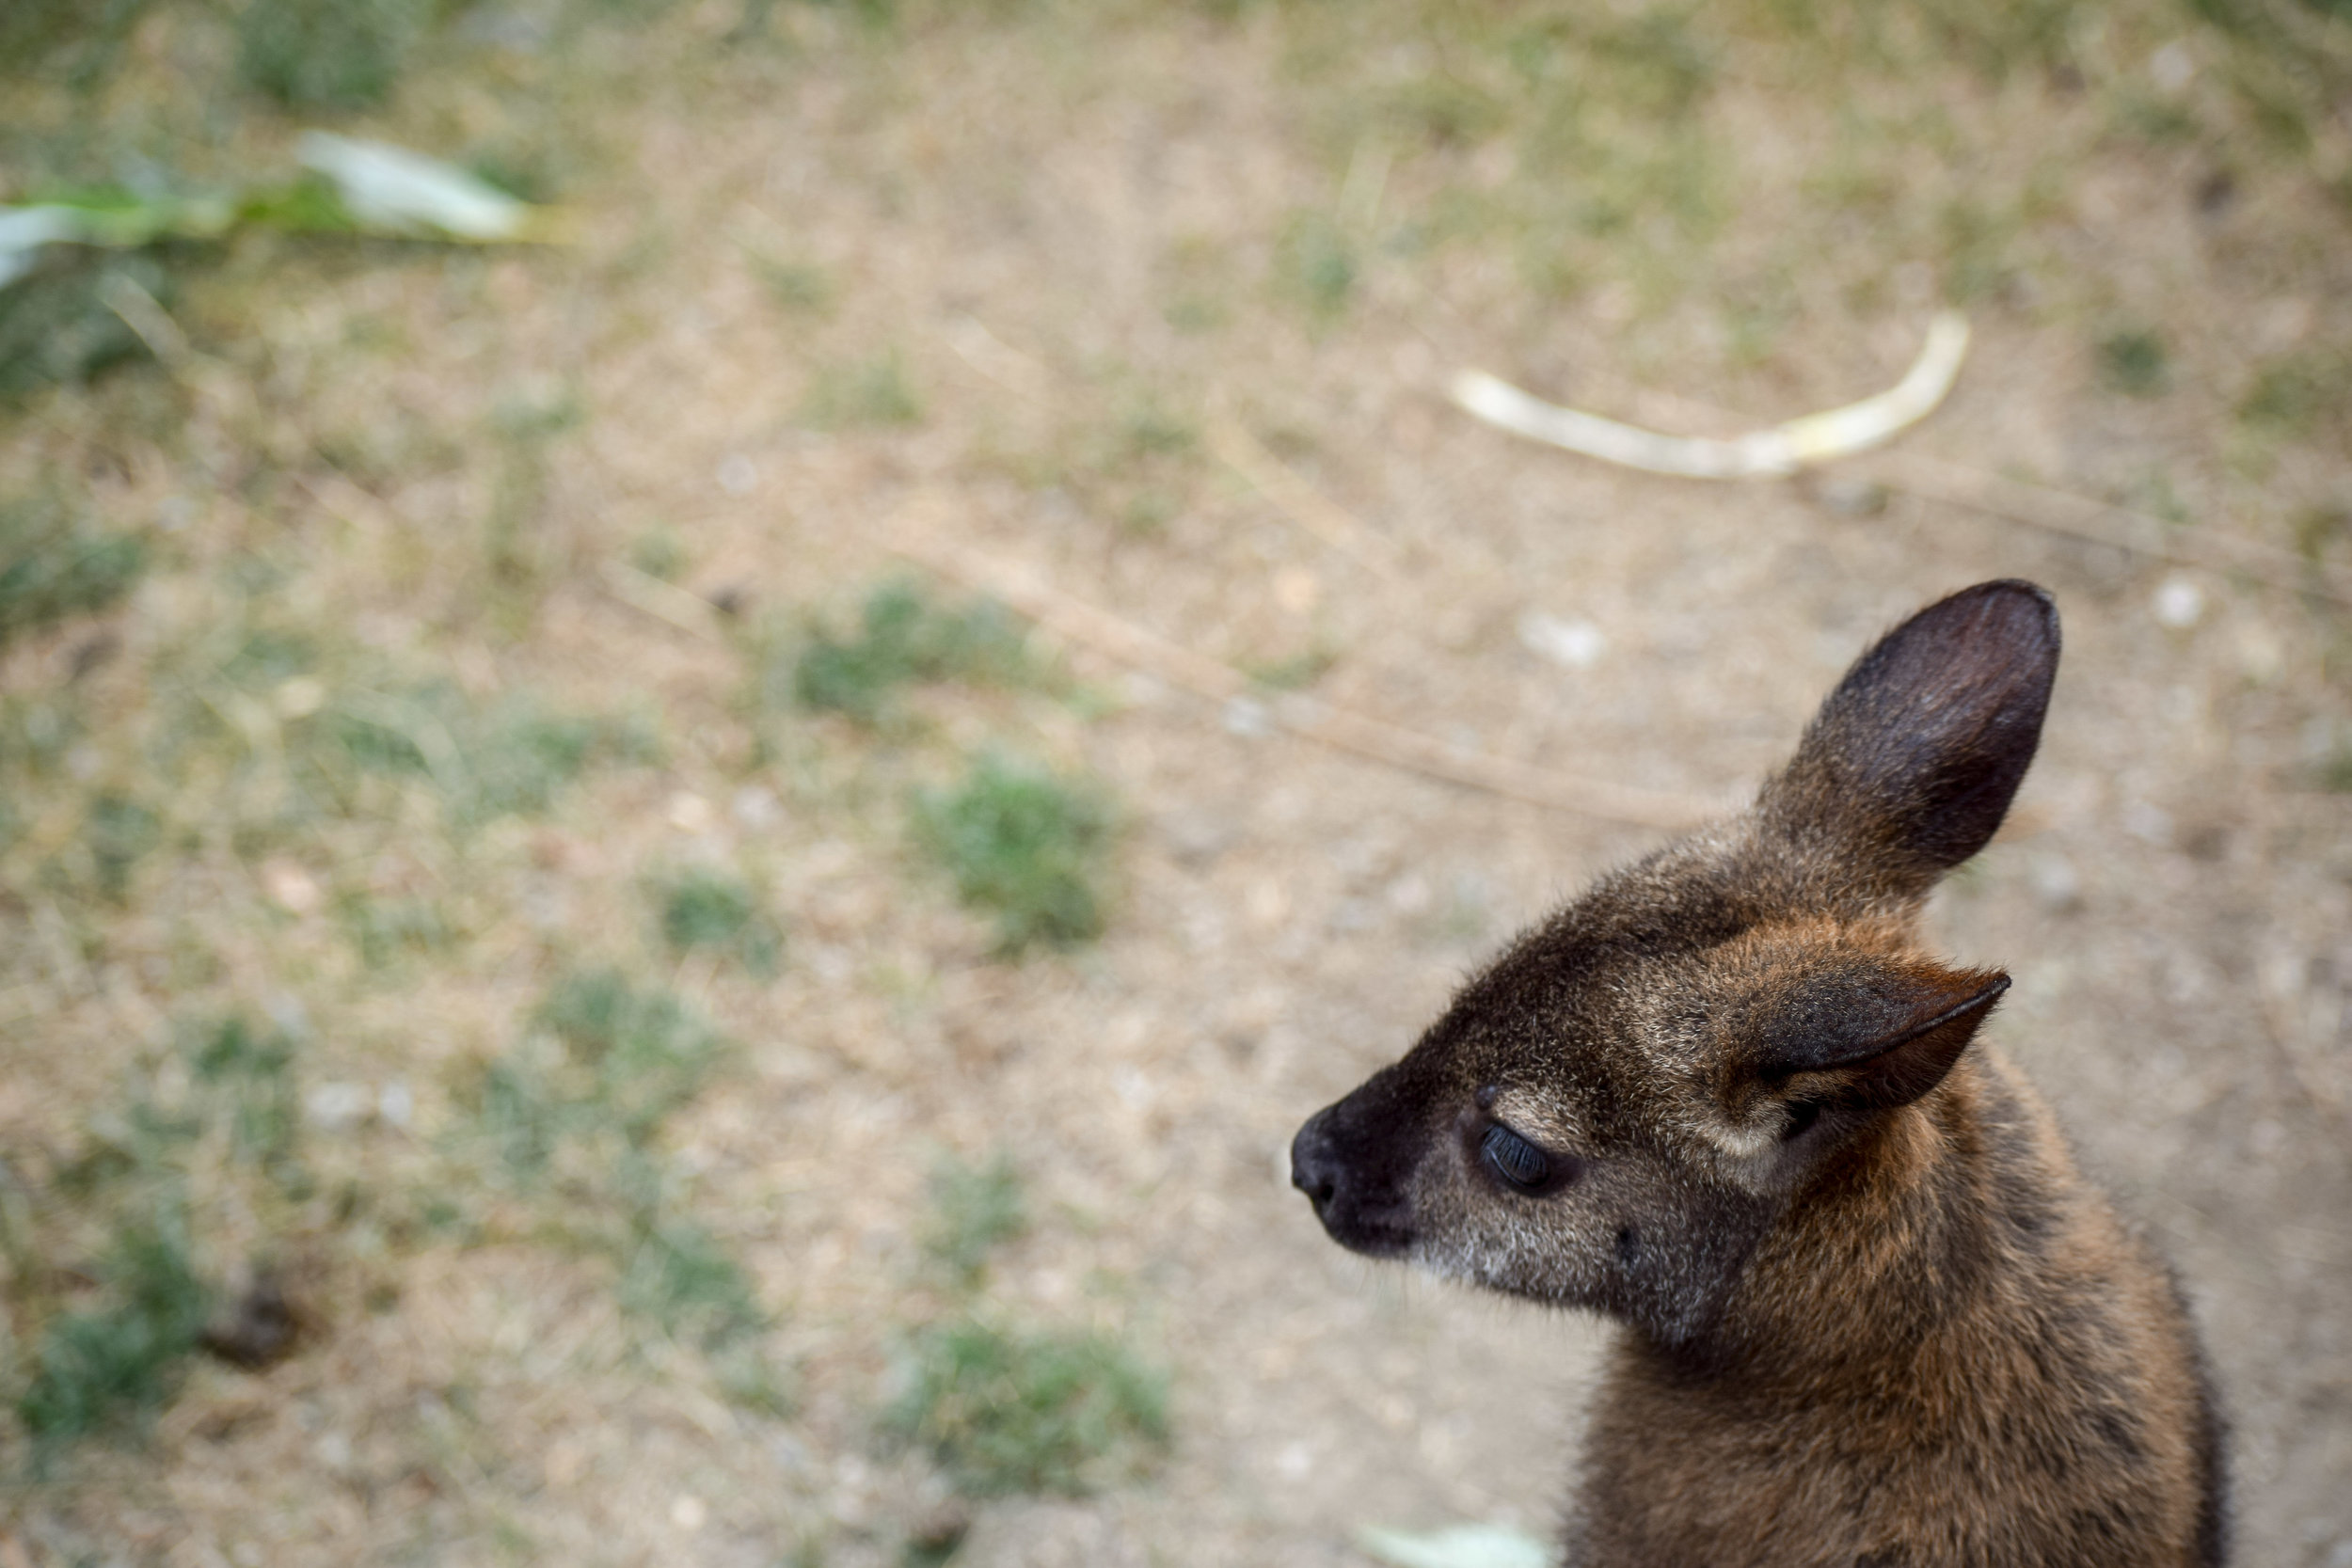 Visiting Kangaroo Creek Farm: What You Need to Know